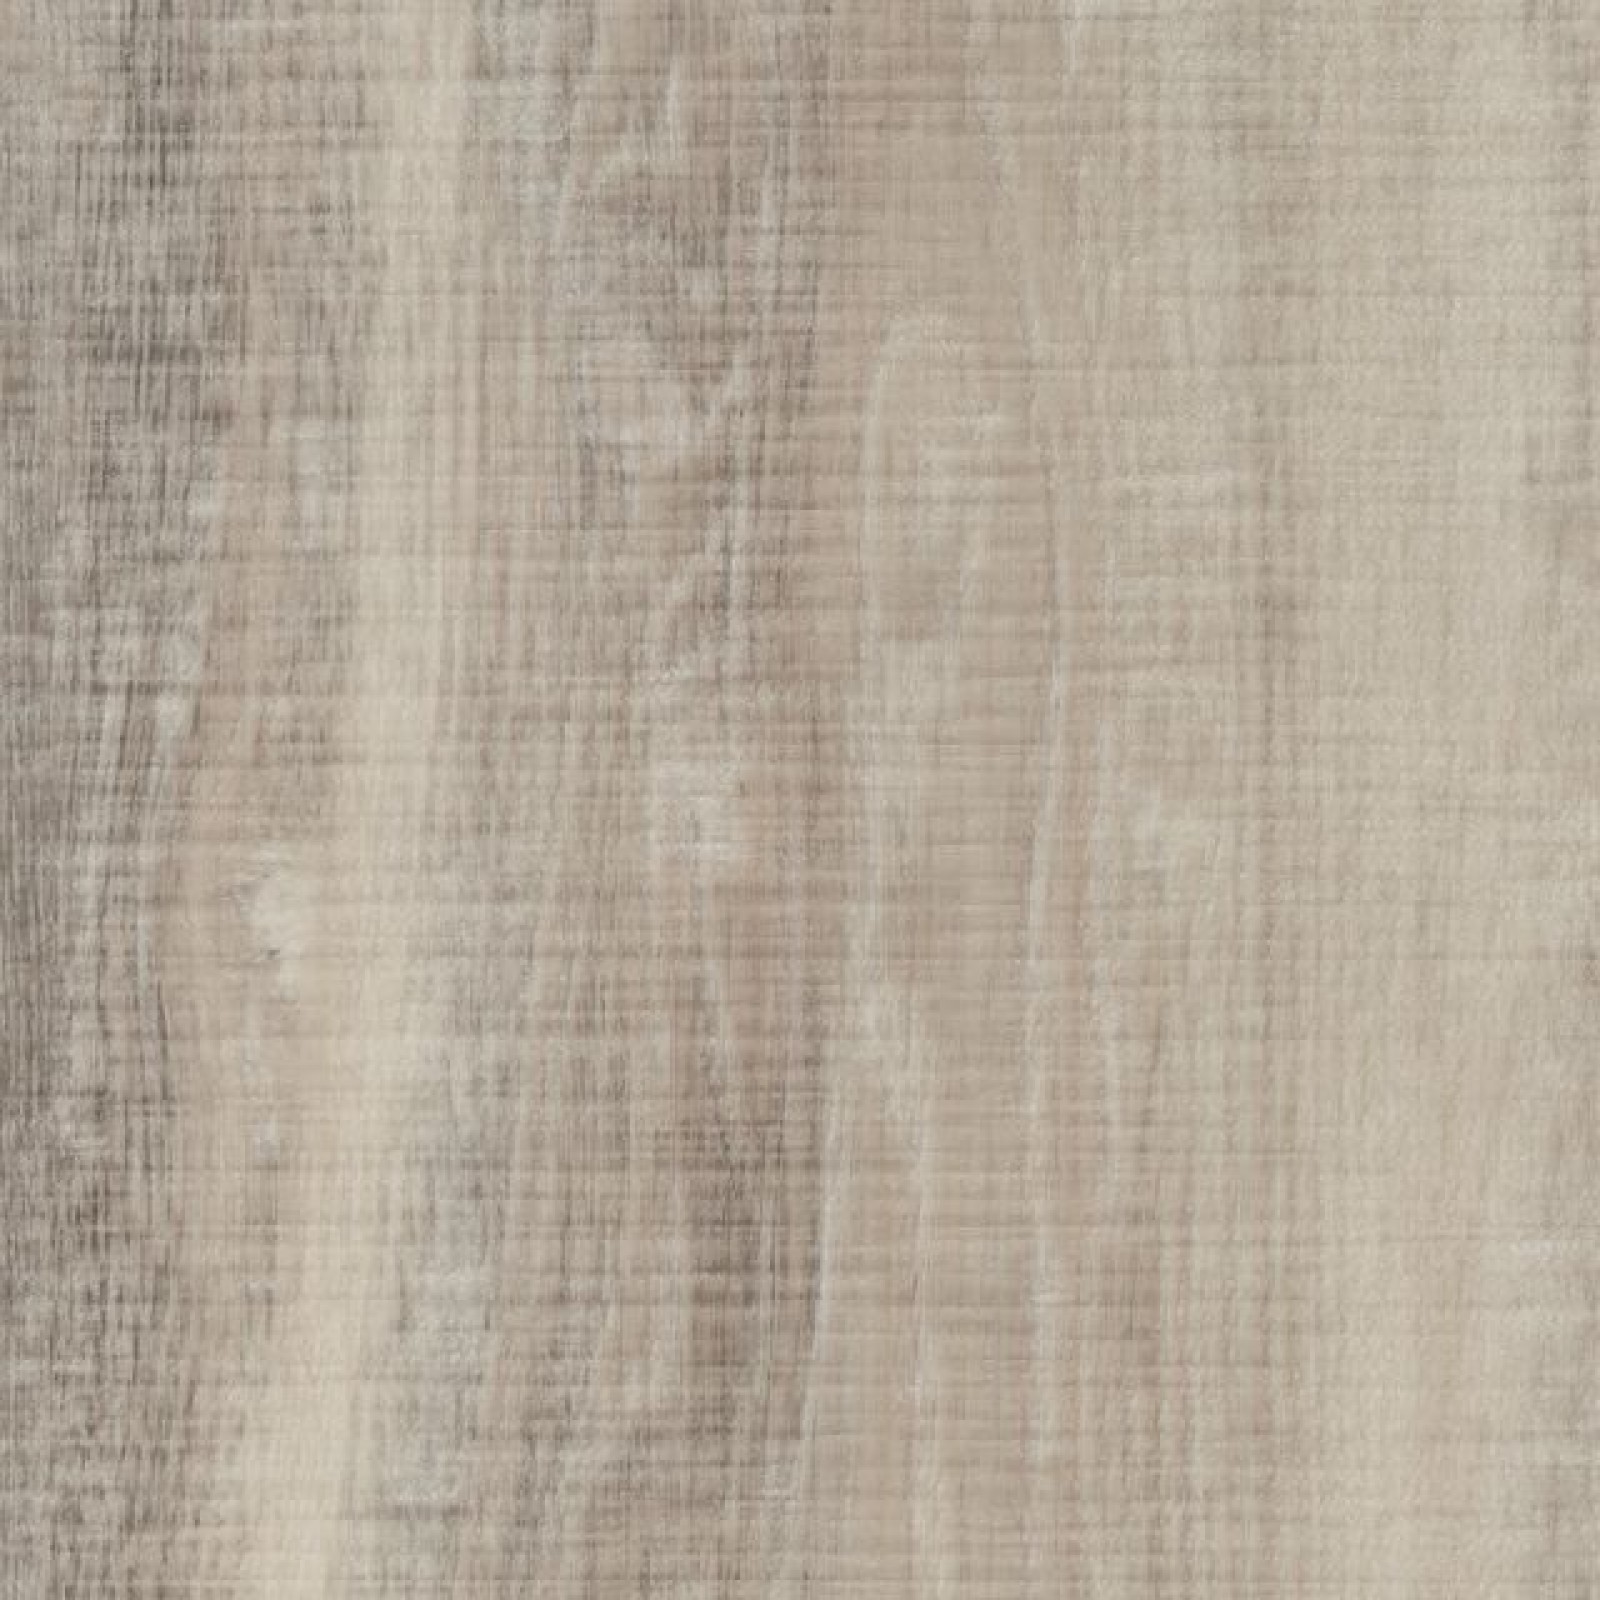 Vzor - 60151CL5 white raw timber